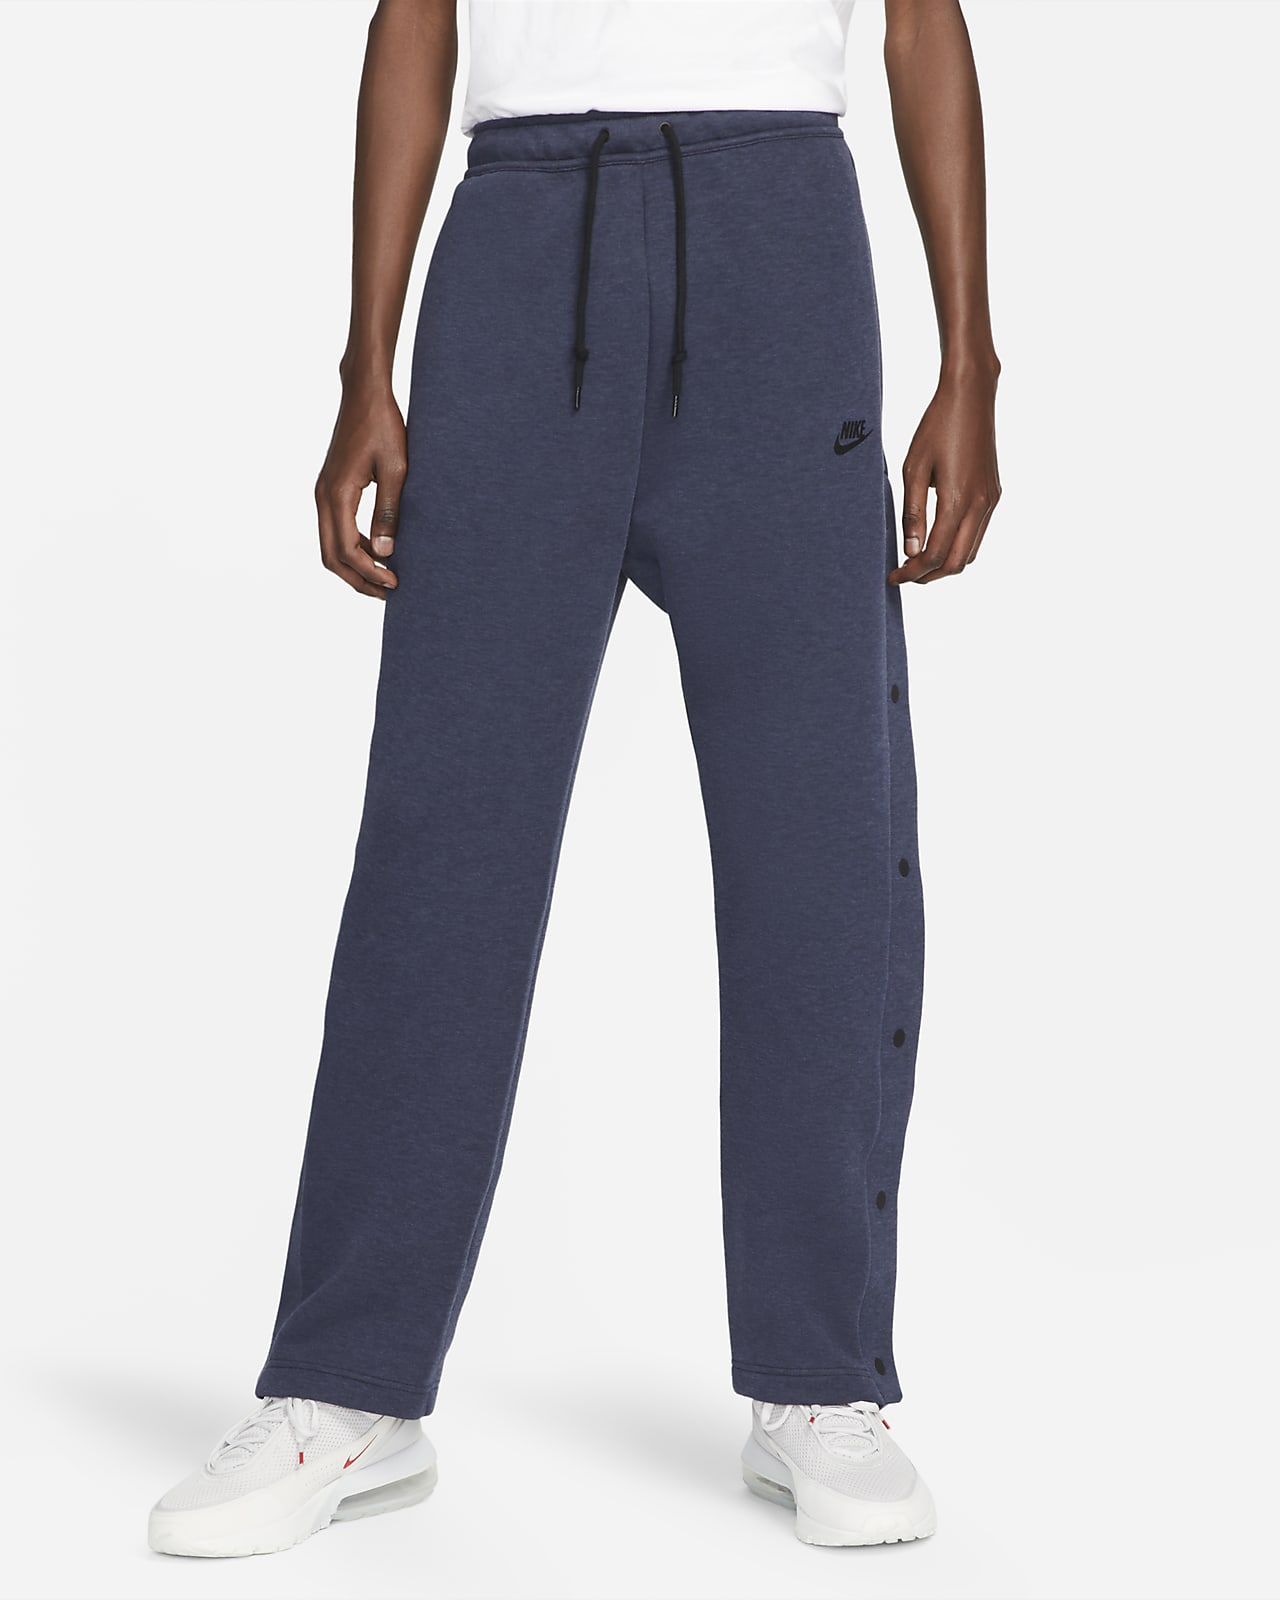 NEW Nike Tech Fleece Pants GIRLS SIZE 6X Sportswear BLACK WHITE 6 Toddler  jeans